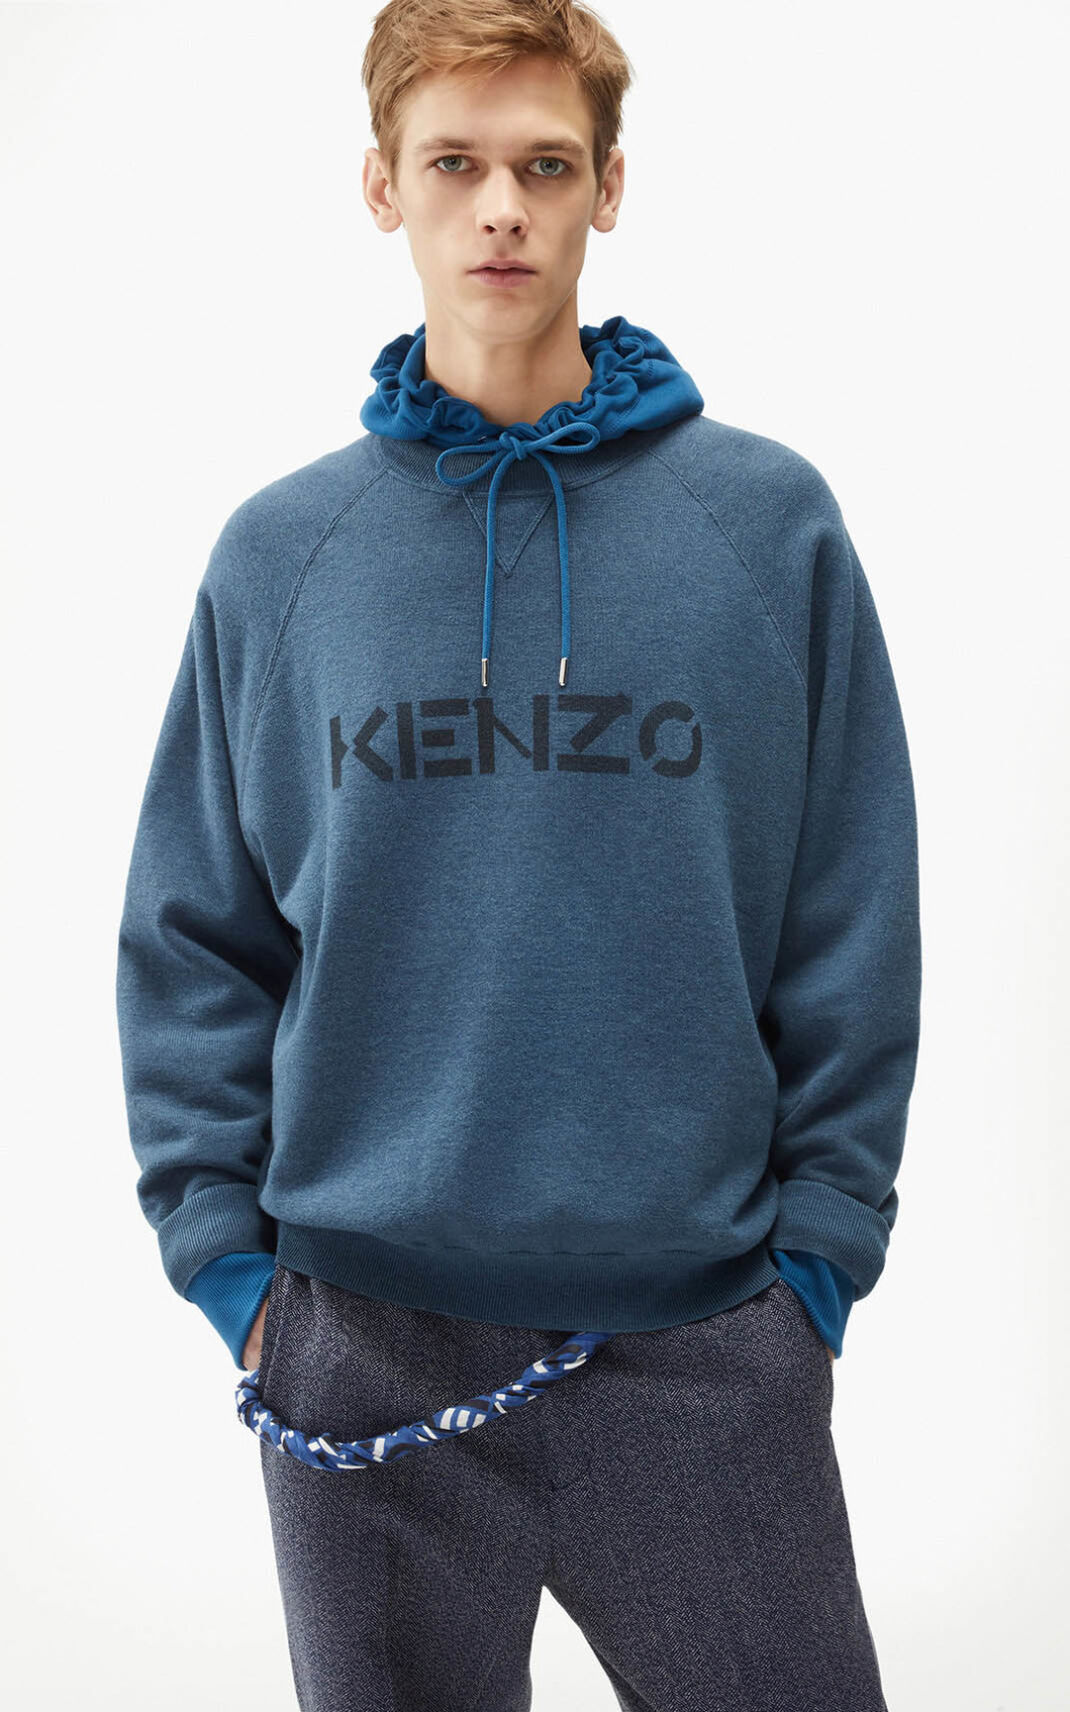 Kenzo logo セーター メンズ 青 - WHUTJD231